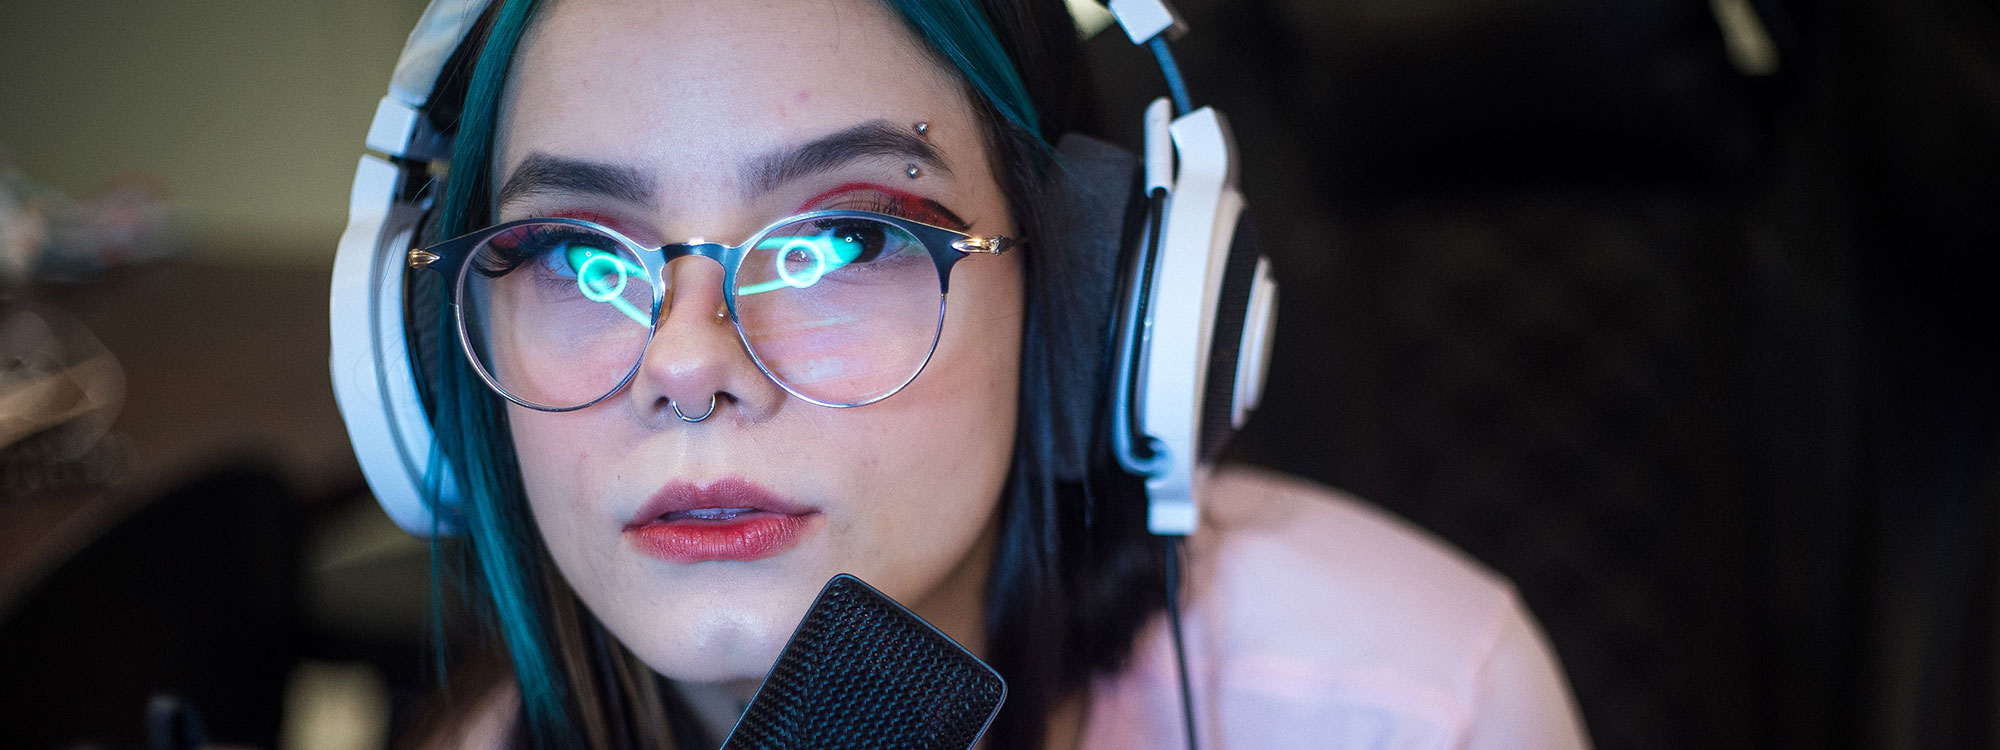 female gamer wearing headphone with microphone